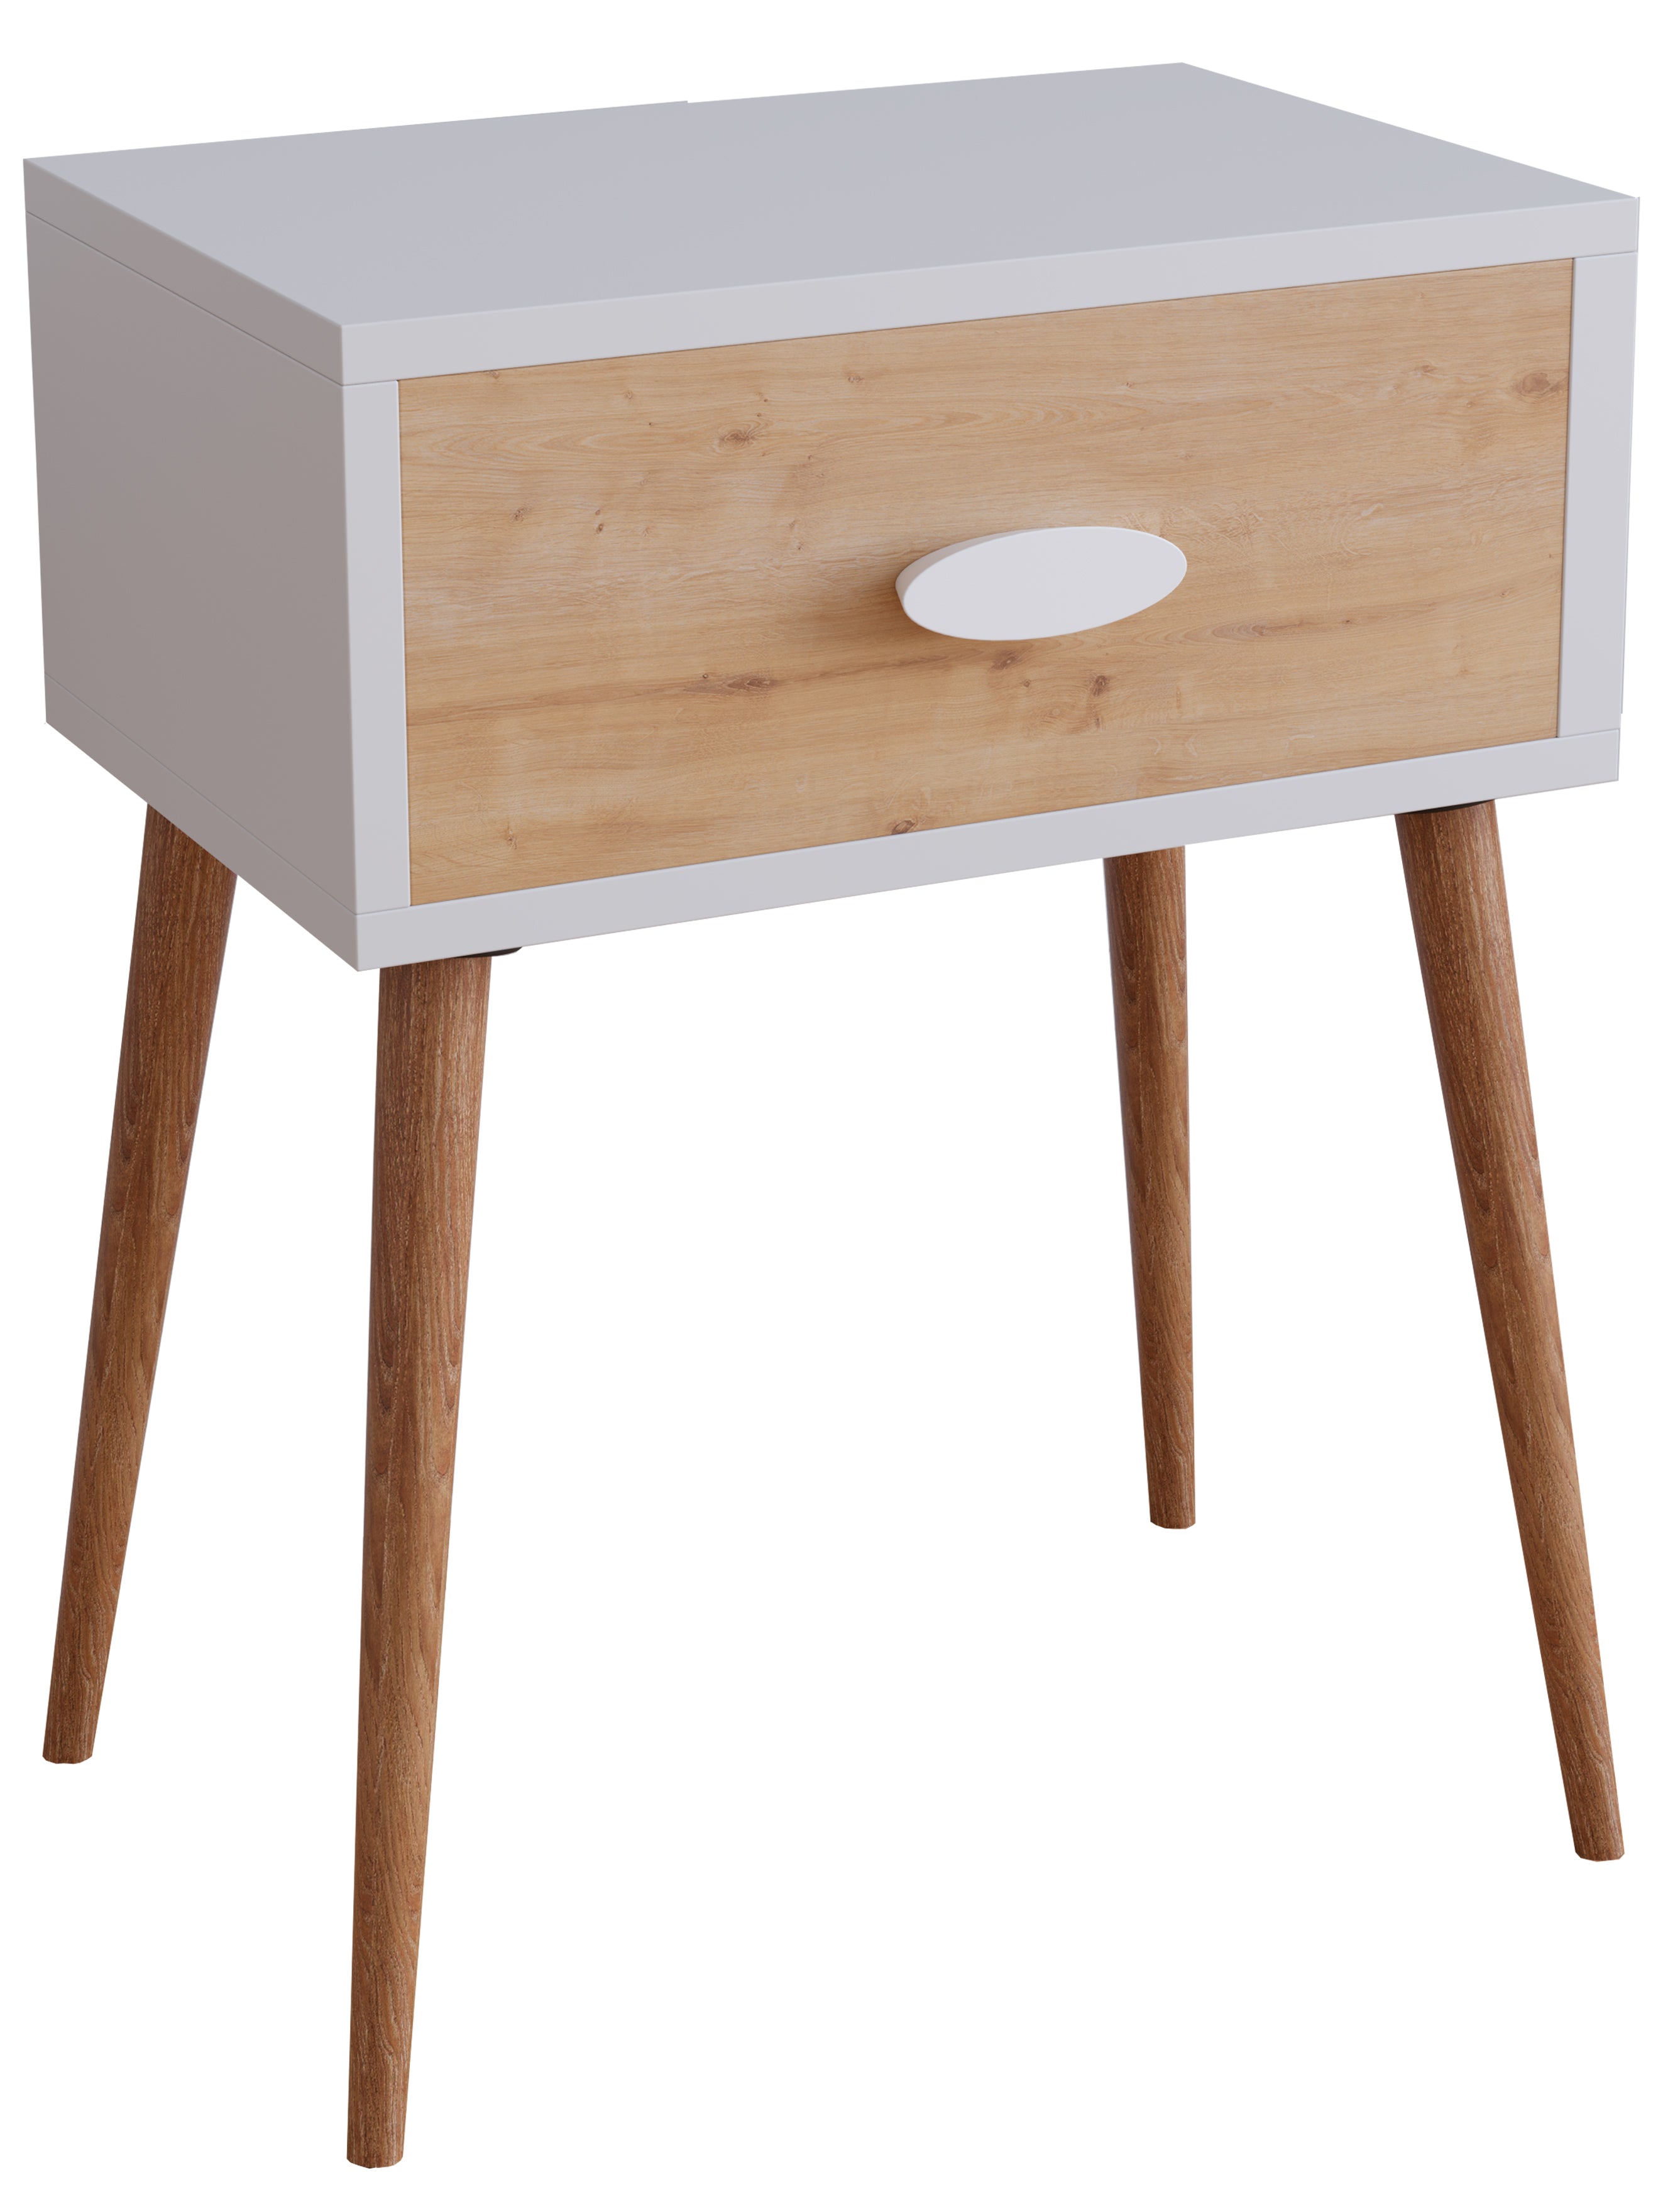 5: Natbord med skuffe, 60x45x30 cm, naturfarvet og hvid